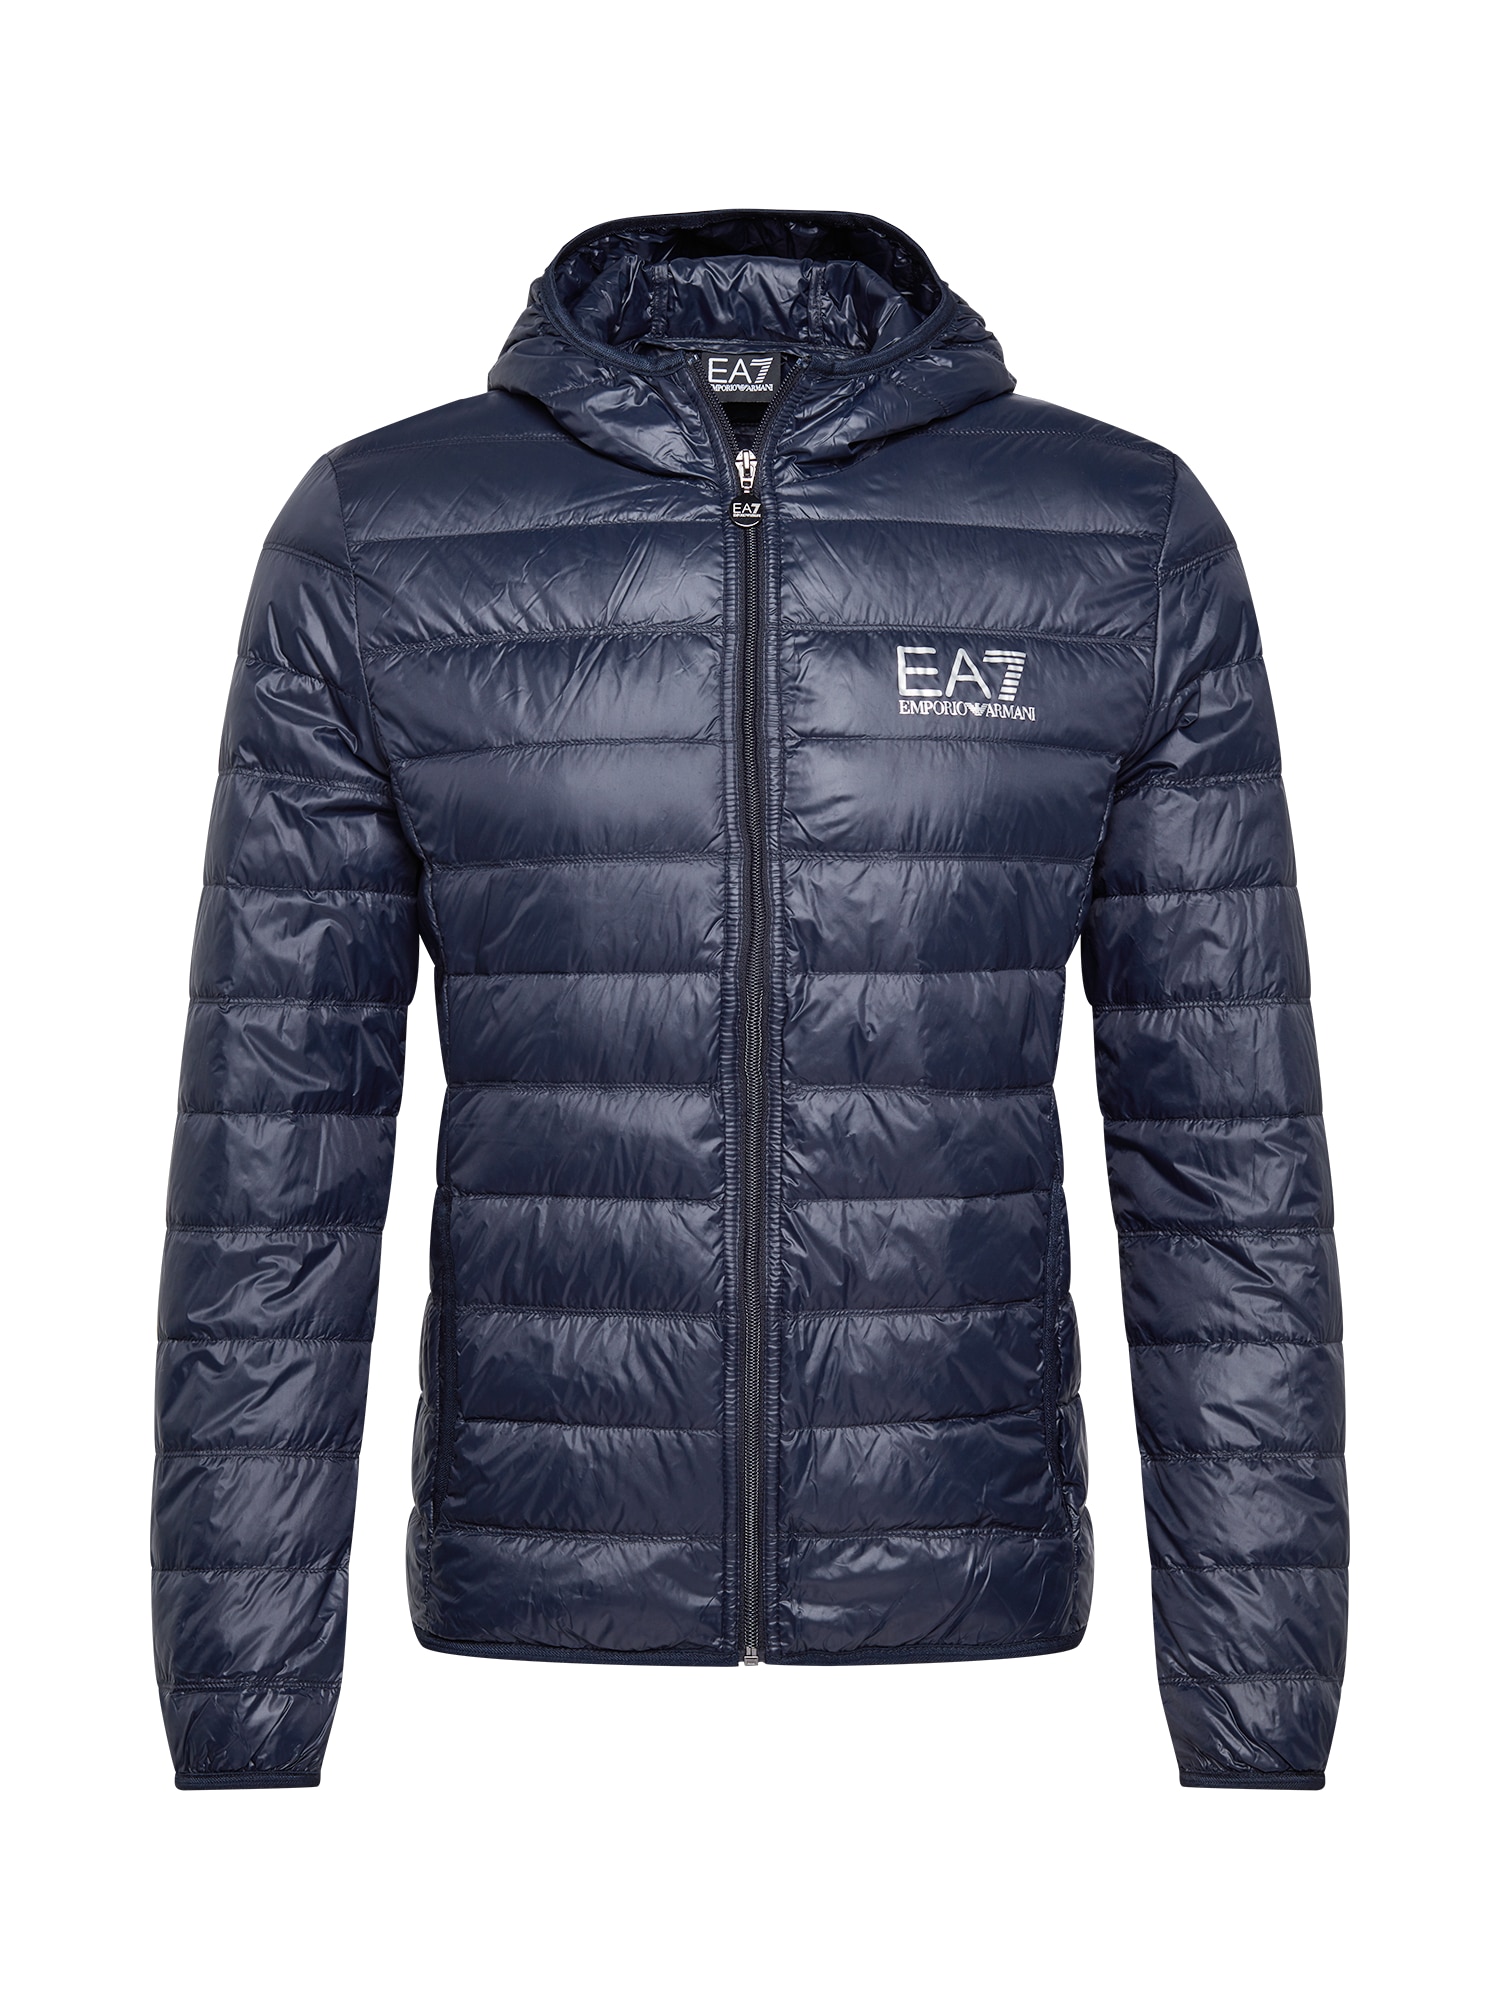 EA7 Emporio Armani Zimska jakna  temno modra / bela